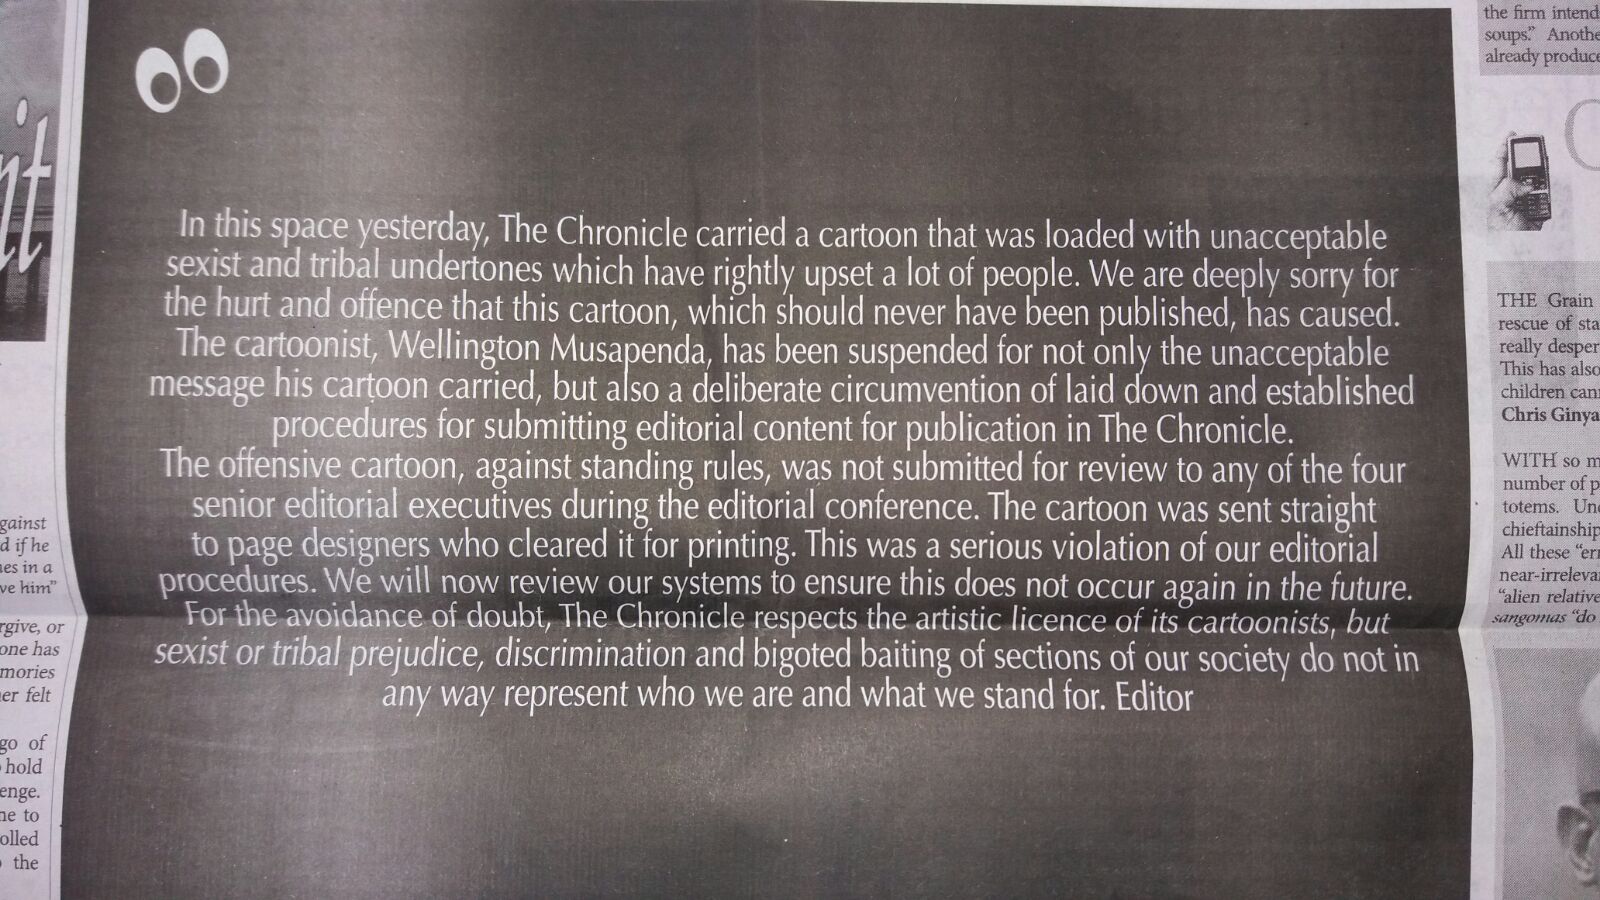  Chronicle apologies for derogatory cartoon 